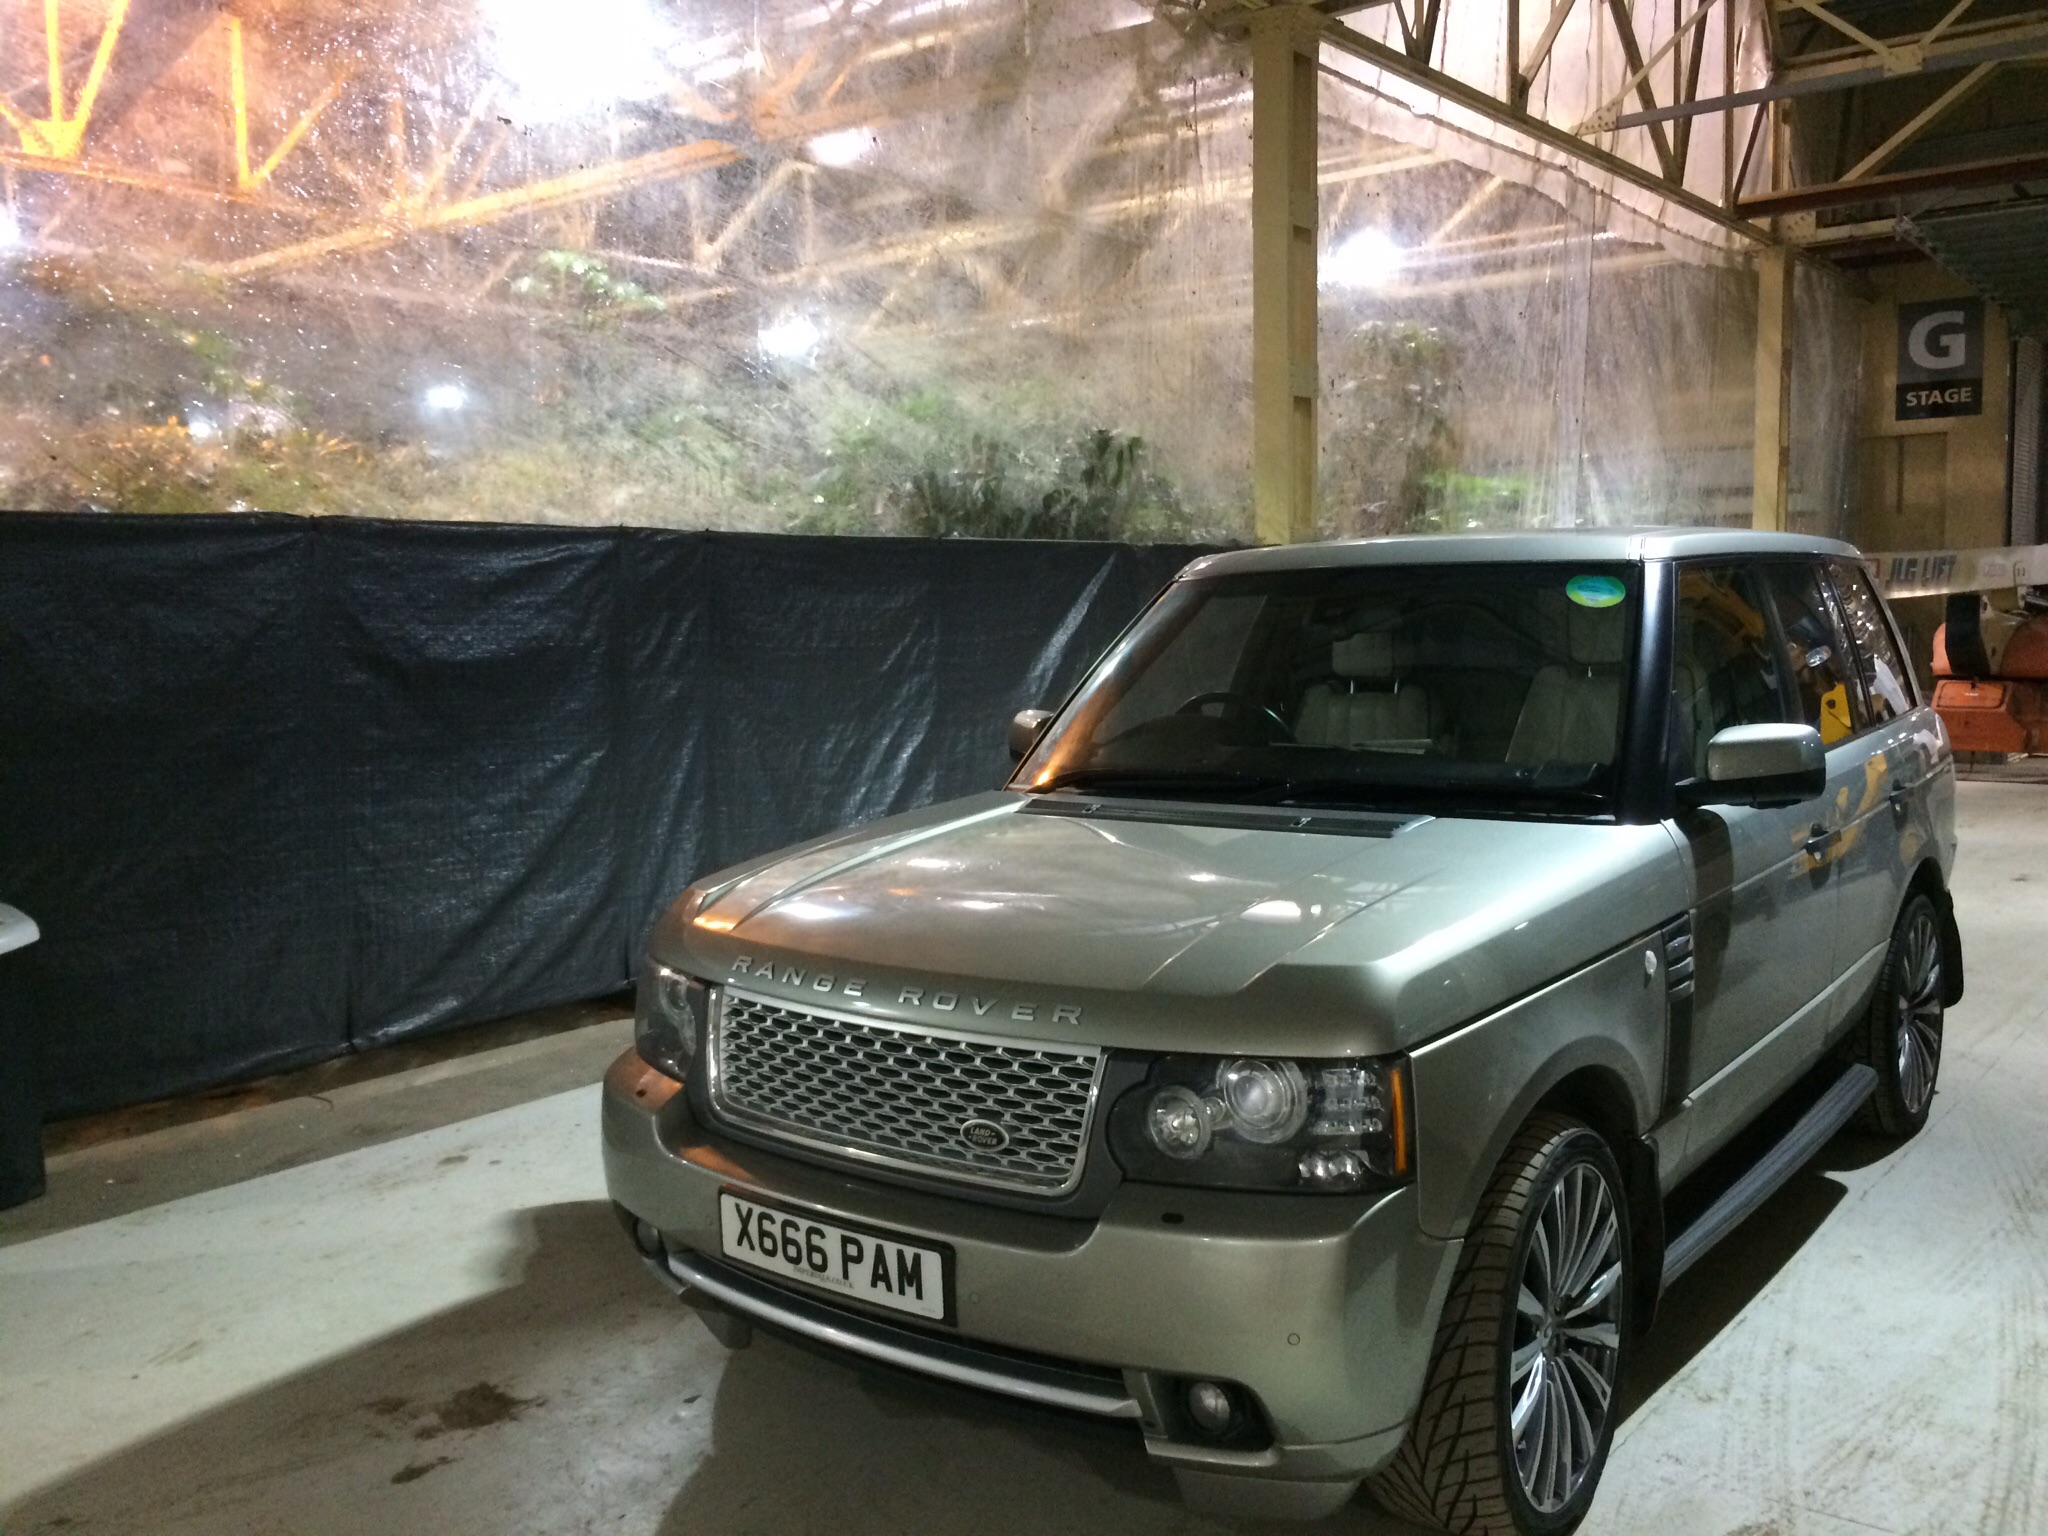 Pam the Range Rover indoors at Leavesden on Mi:5 Jan 2015